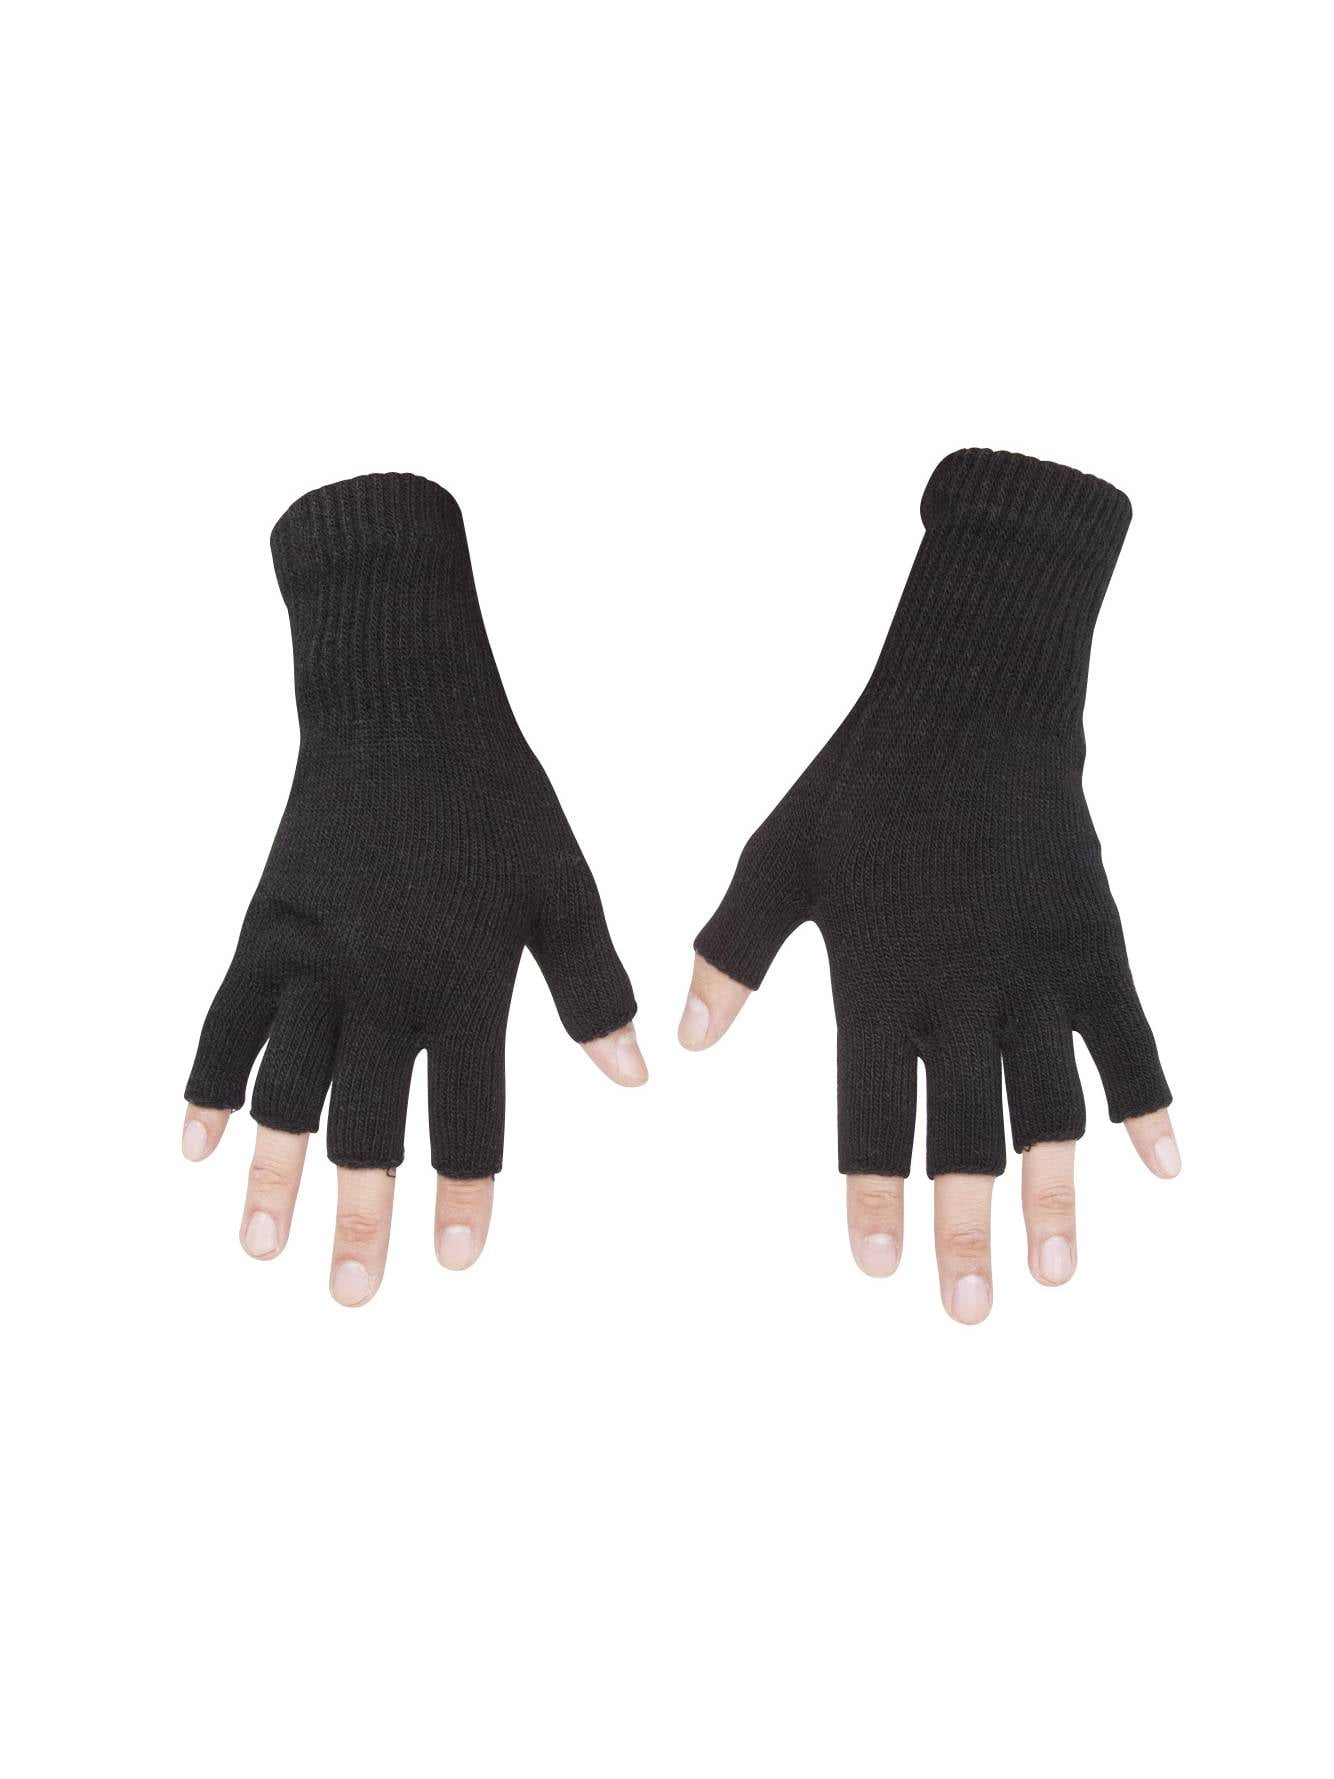 Unisex Knit Half Gloves, Gravity Warm Stretchy Blue Threads Fingerless Navy Finger